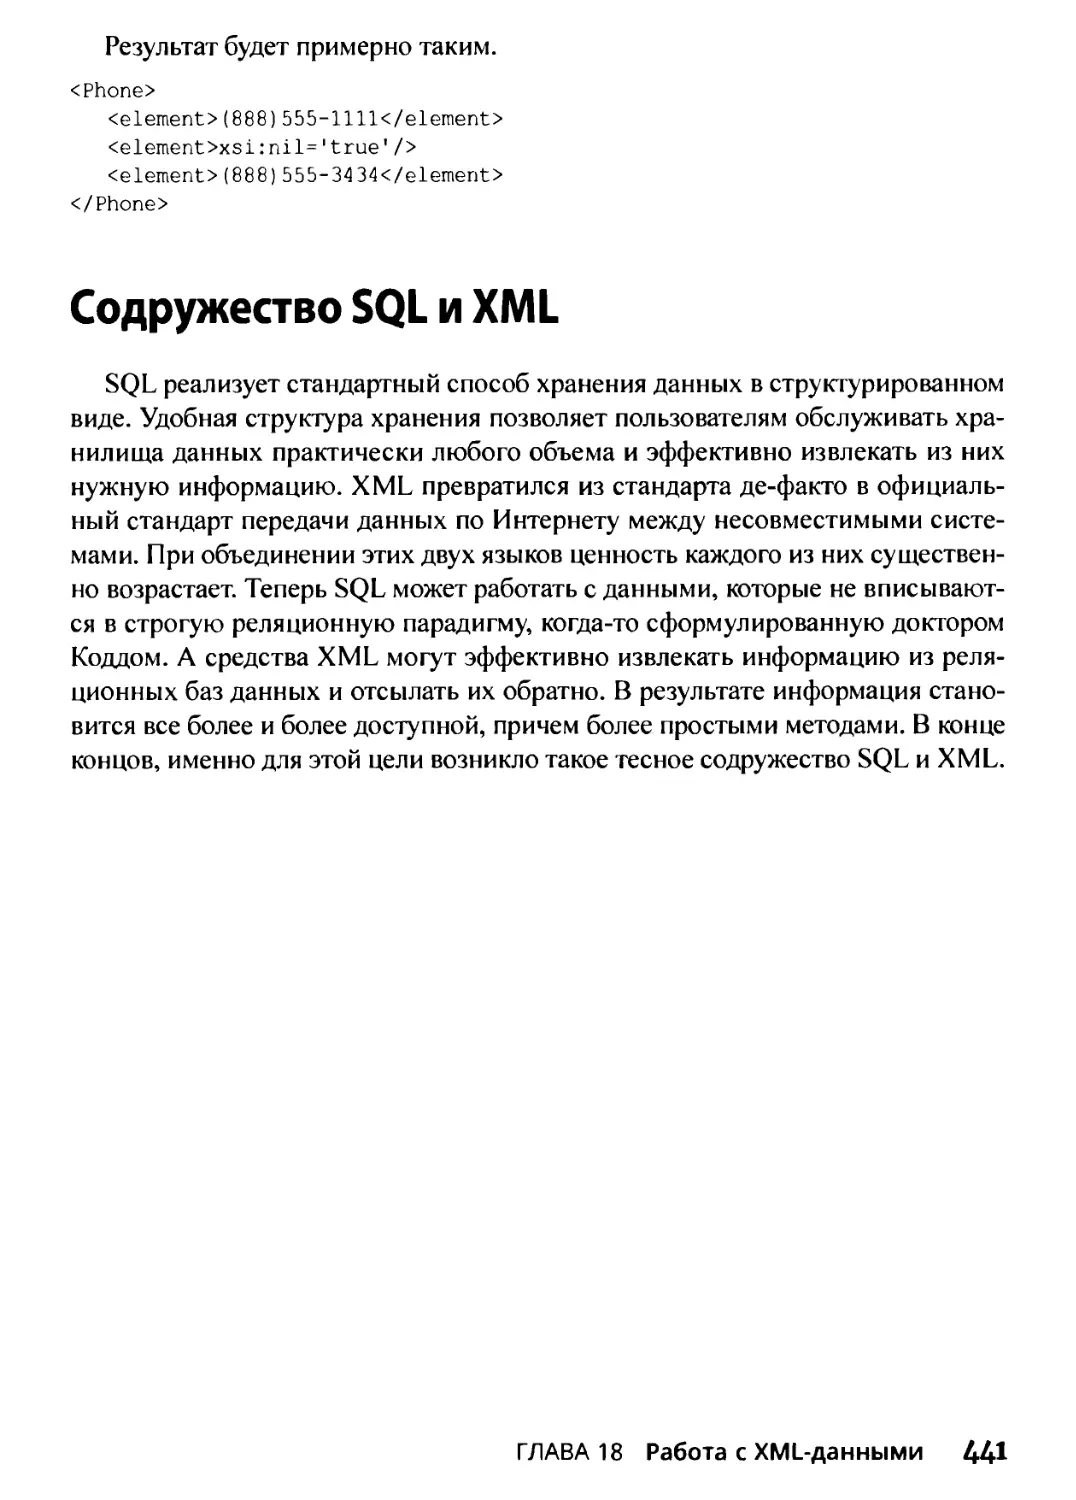 Содружество SQL и XML